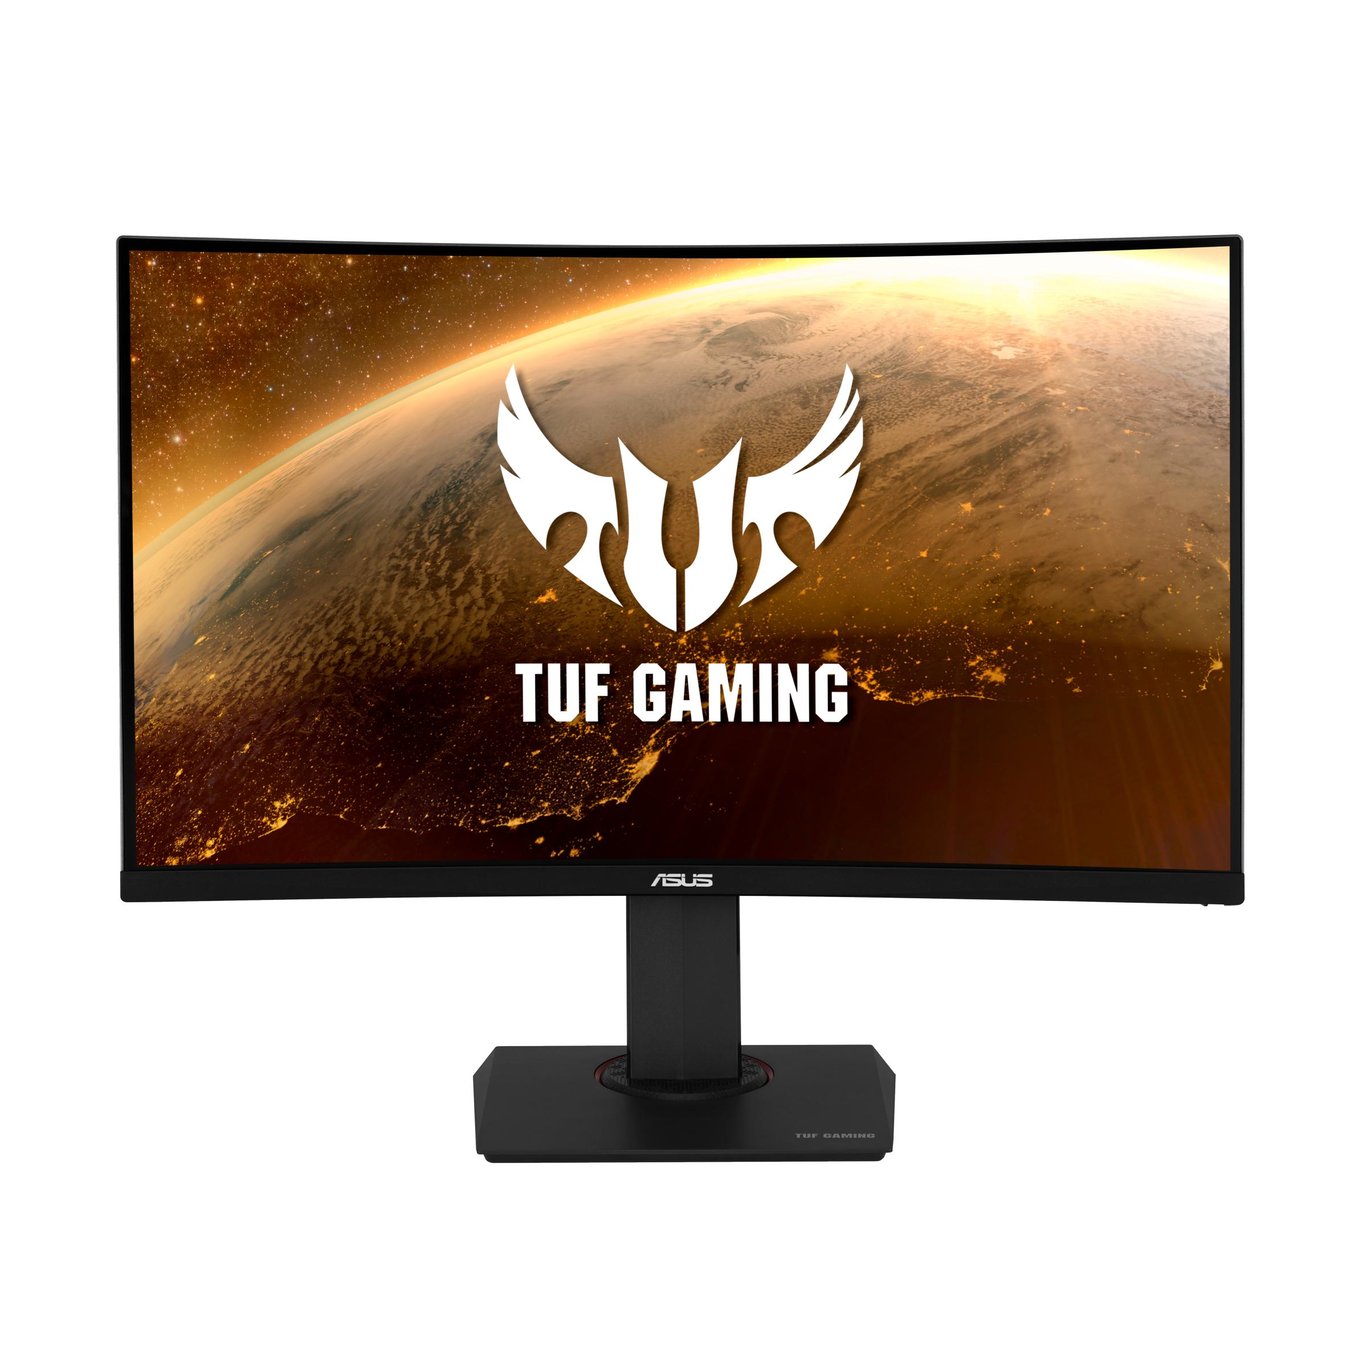 ASUS 華碩 TUF Gaming VG32VQR 電競顯示器